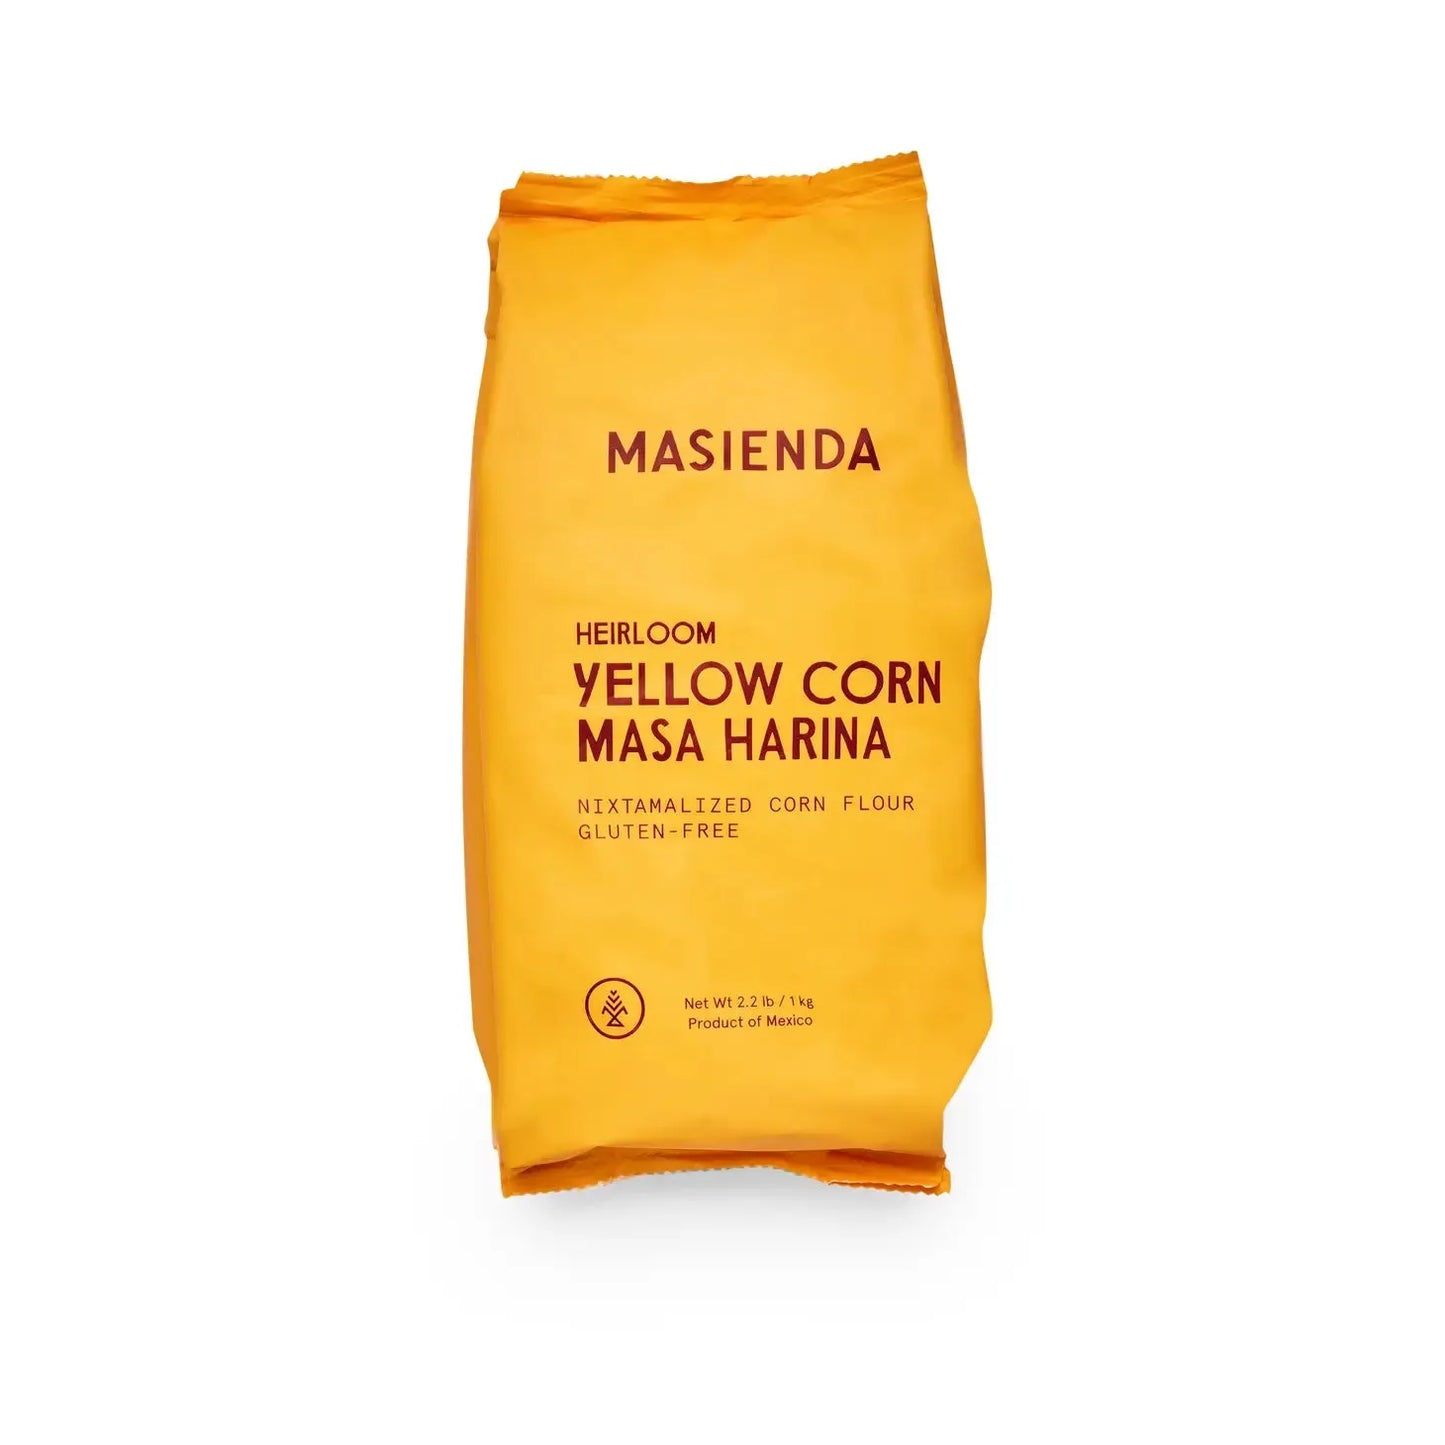 Masienda Heirloom Yellow Corn Masa Harina